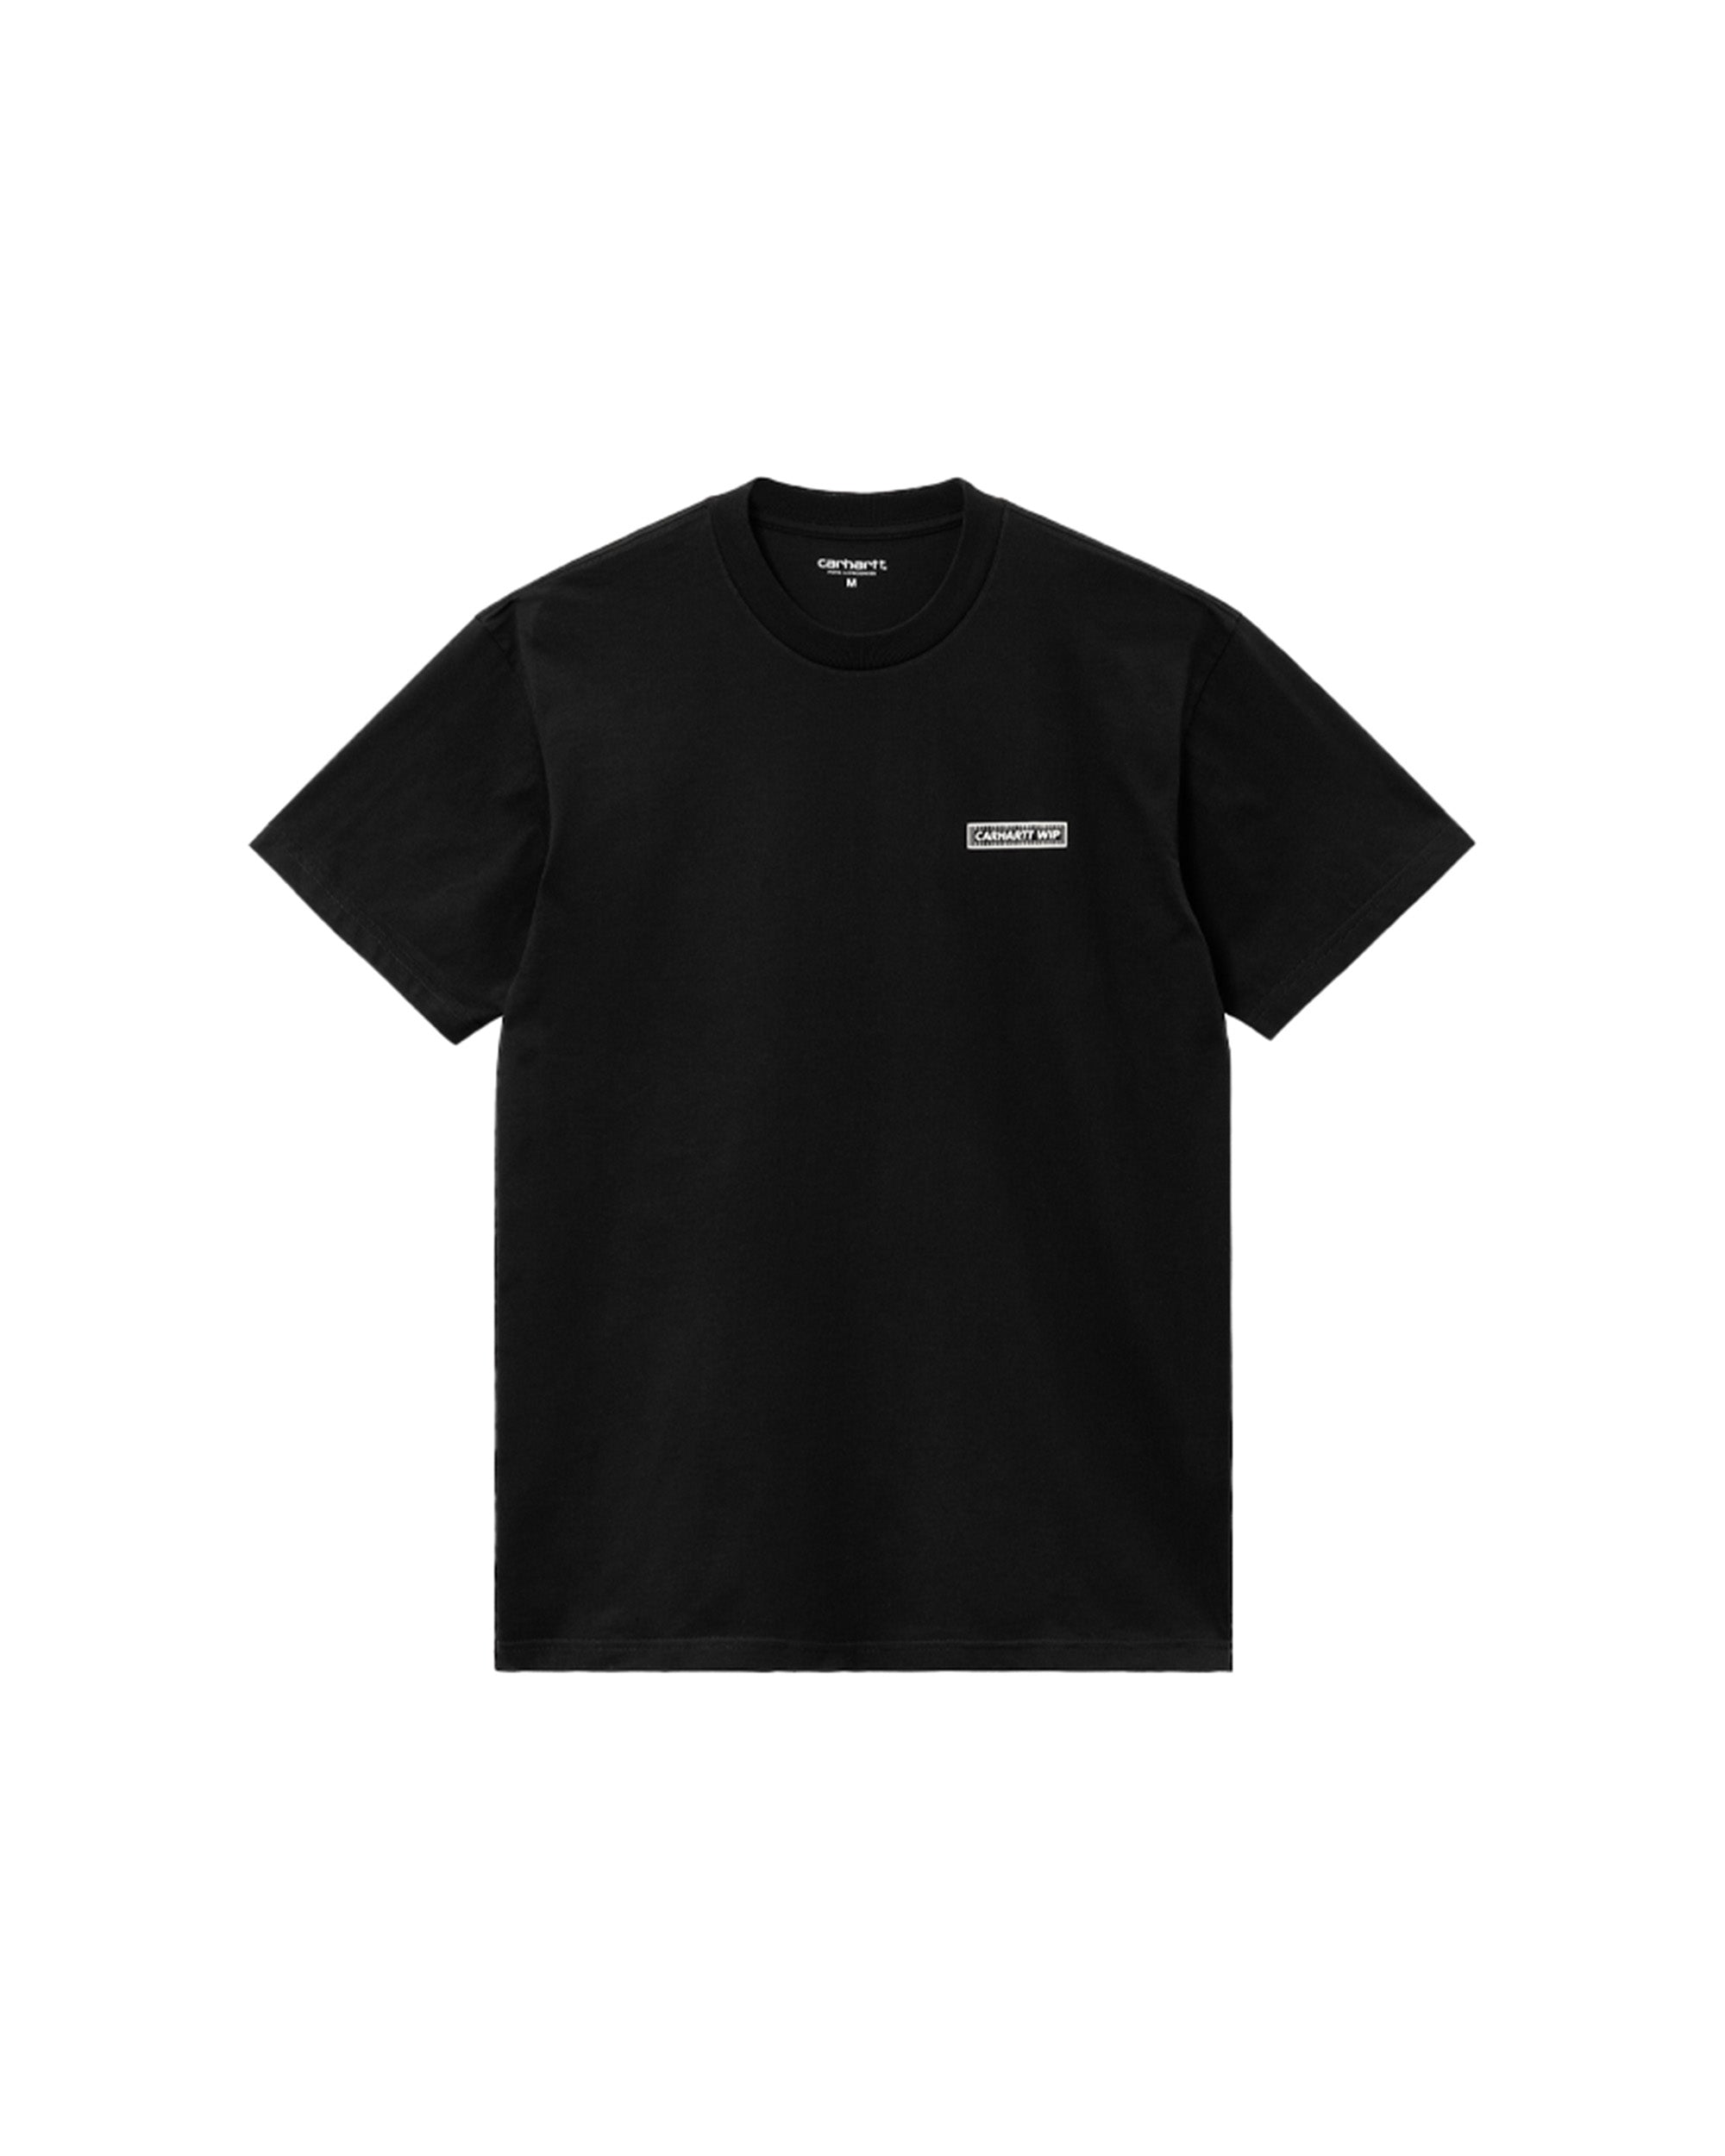 S/S Garden T-shirt - Black